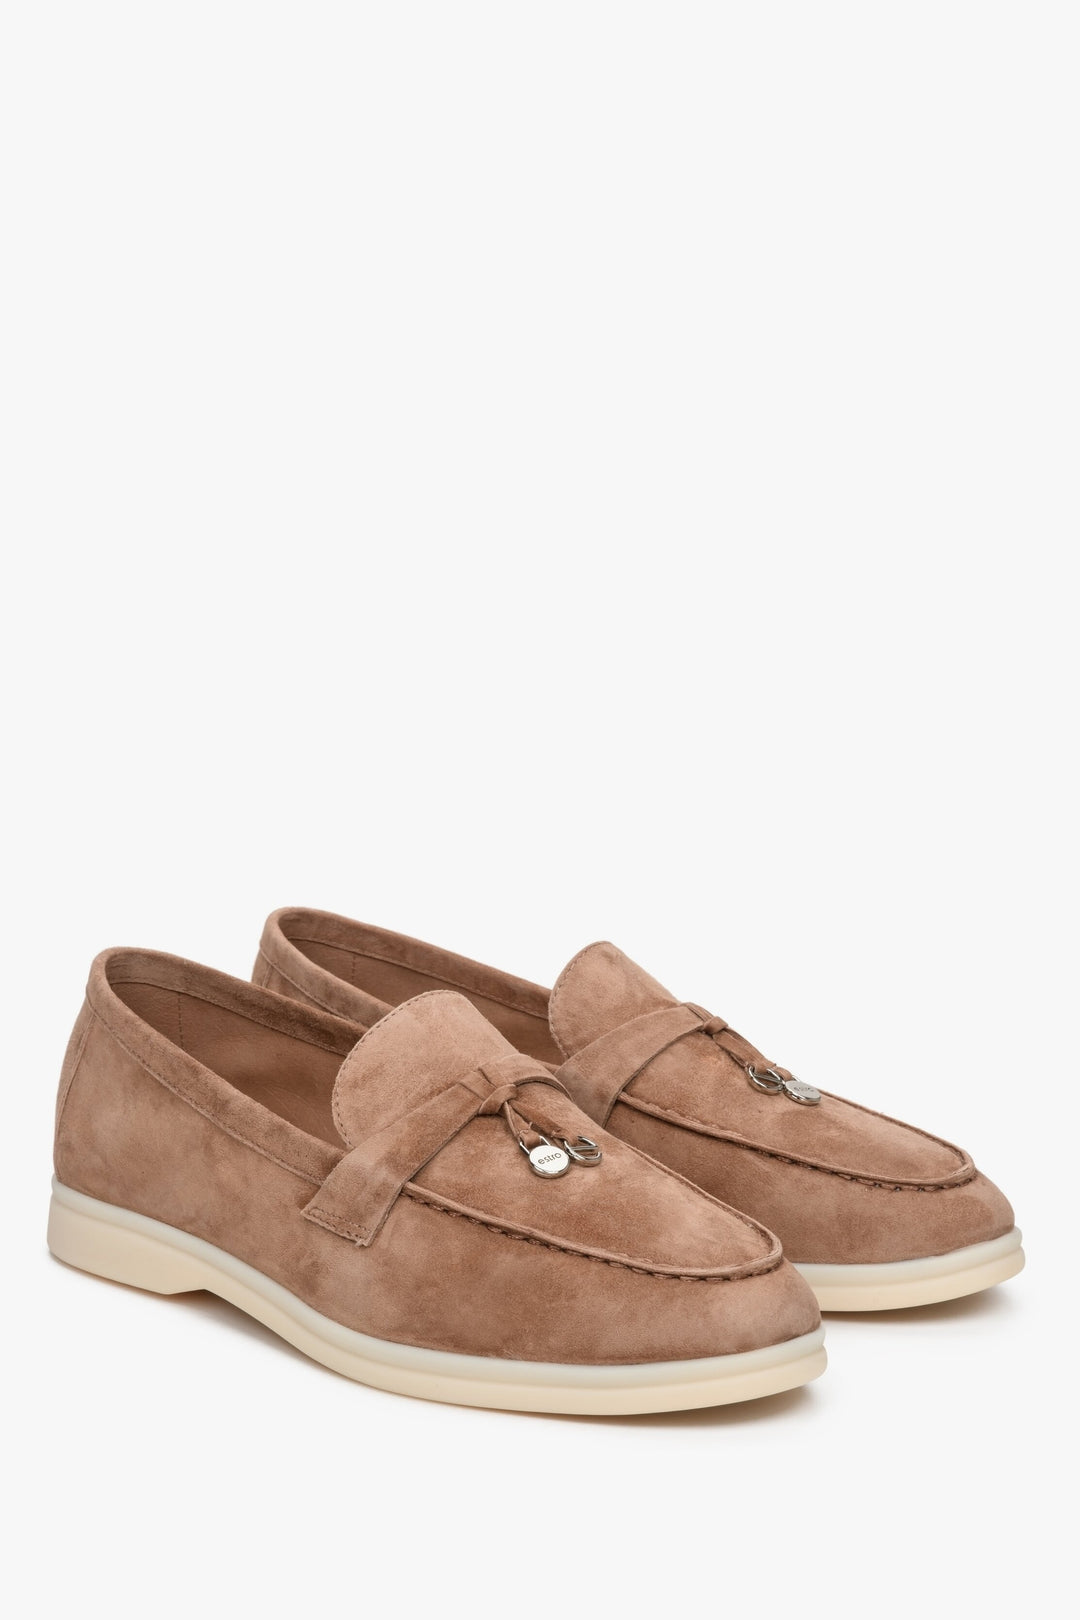 Brown velour women's slip on loafers,